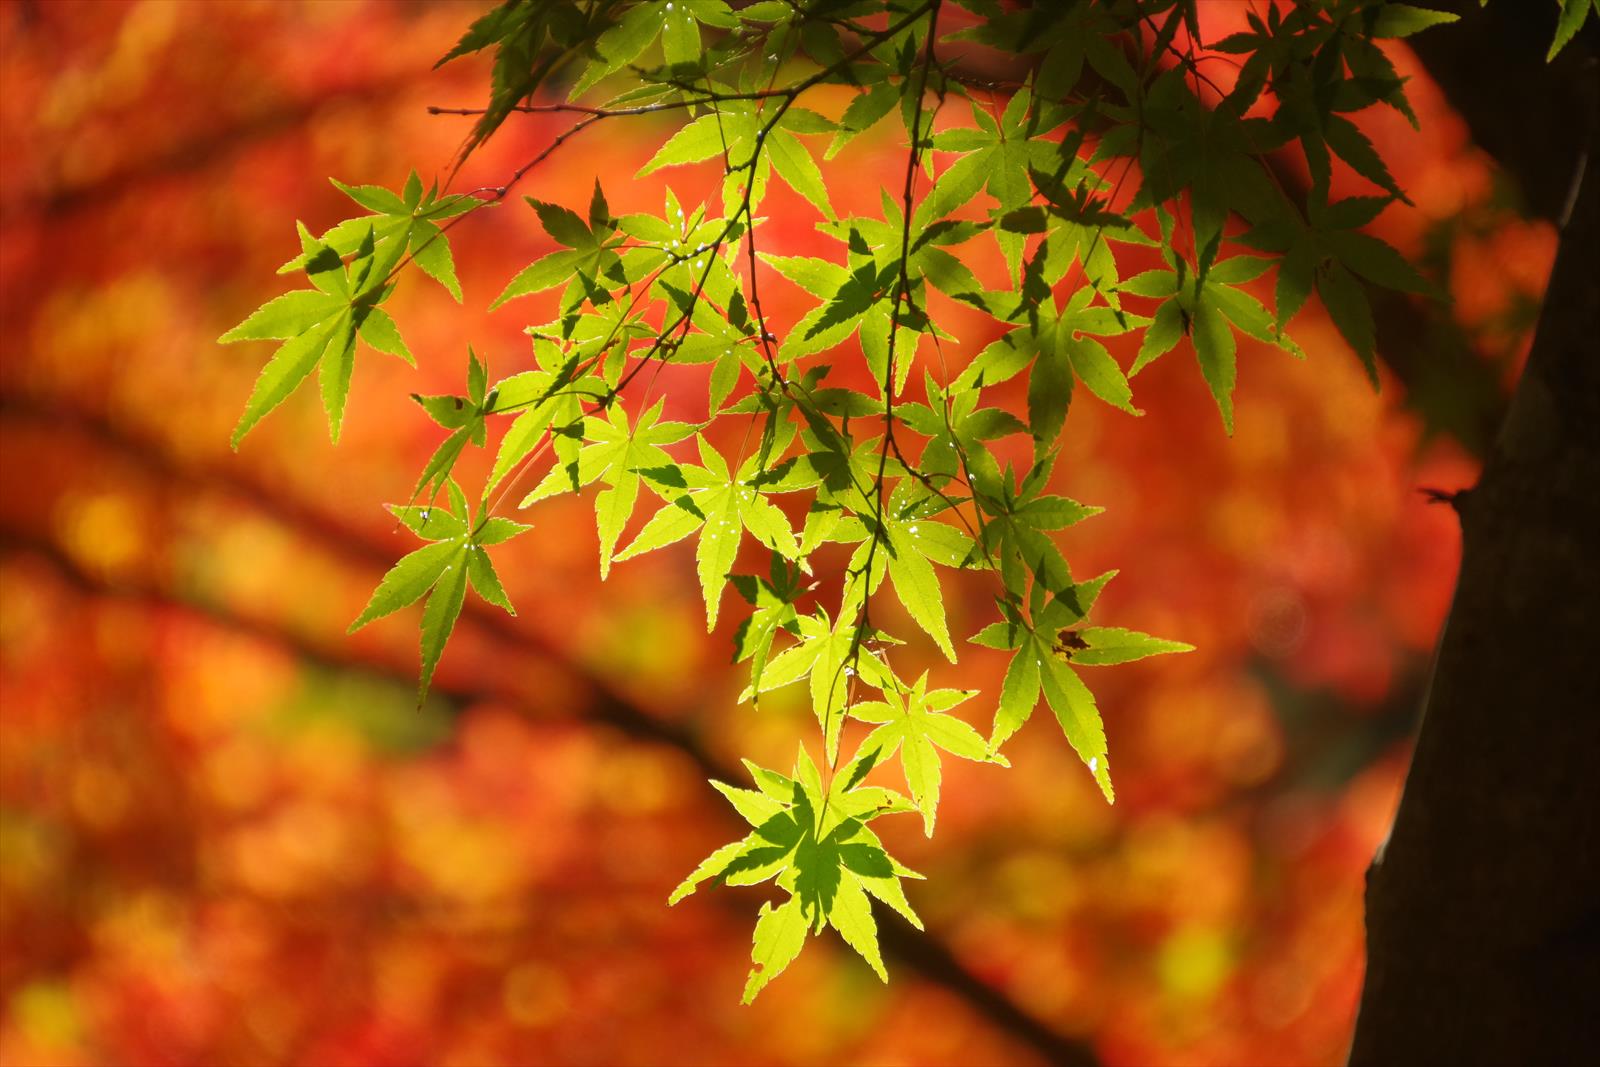 大柳川渓谷の紅葉